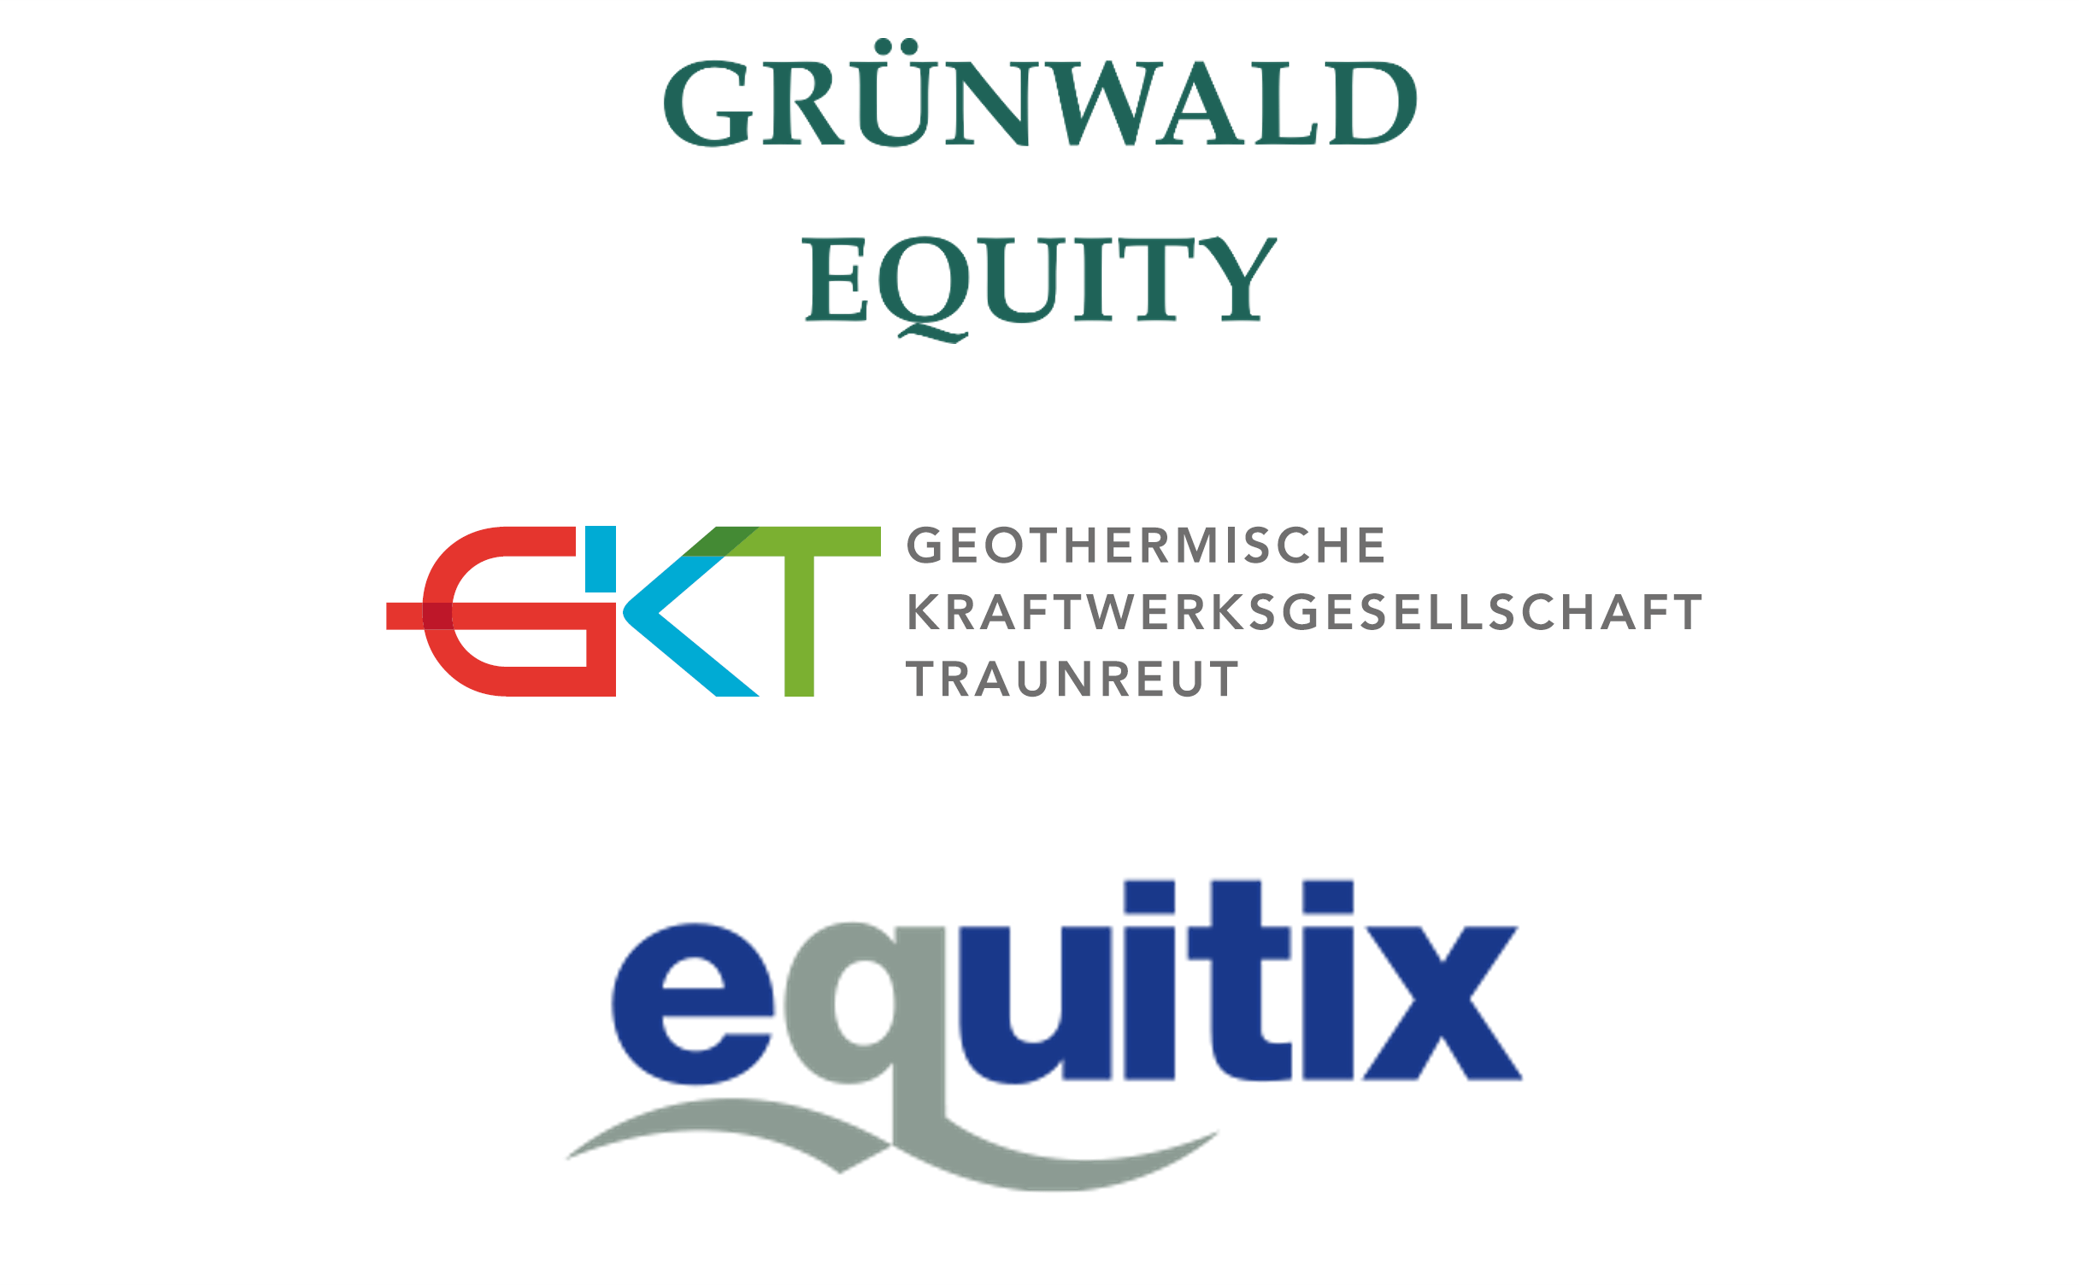 Gruenwald Equity & EKT & Equitix